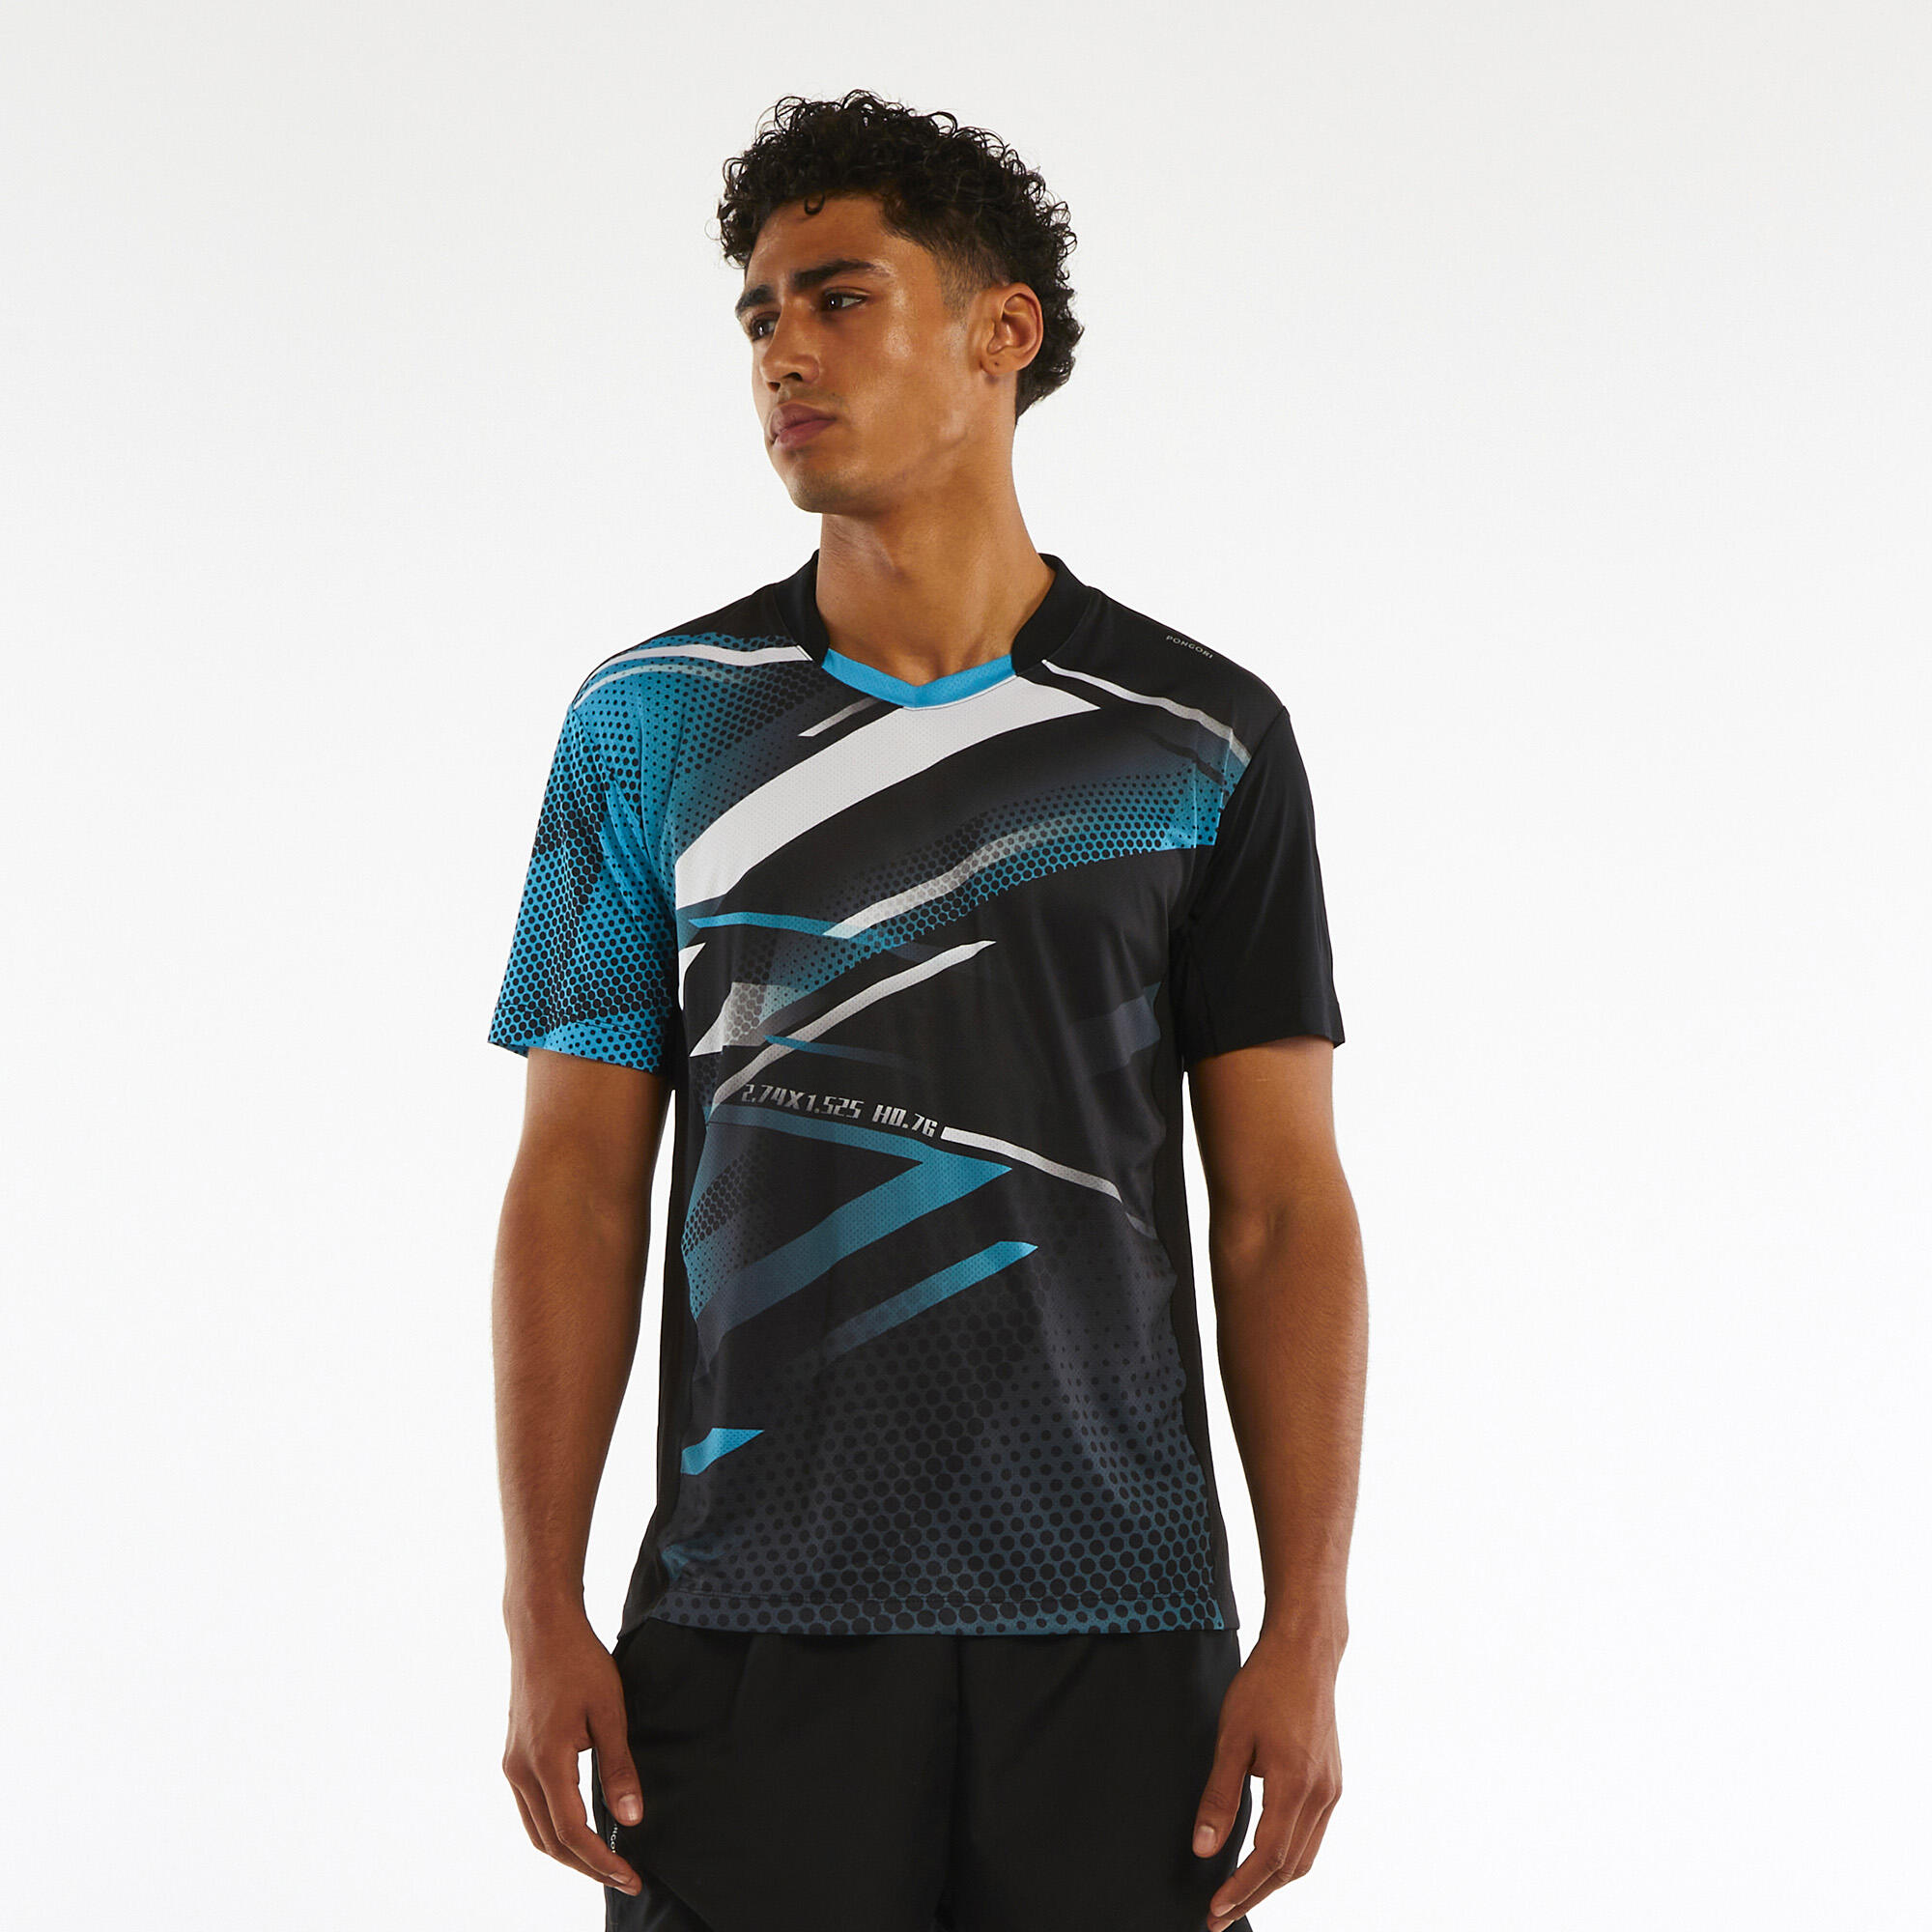 Men's Table Tennis T-Shirt TTP560 - Black/Blue 1/6